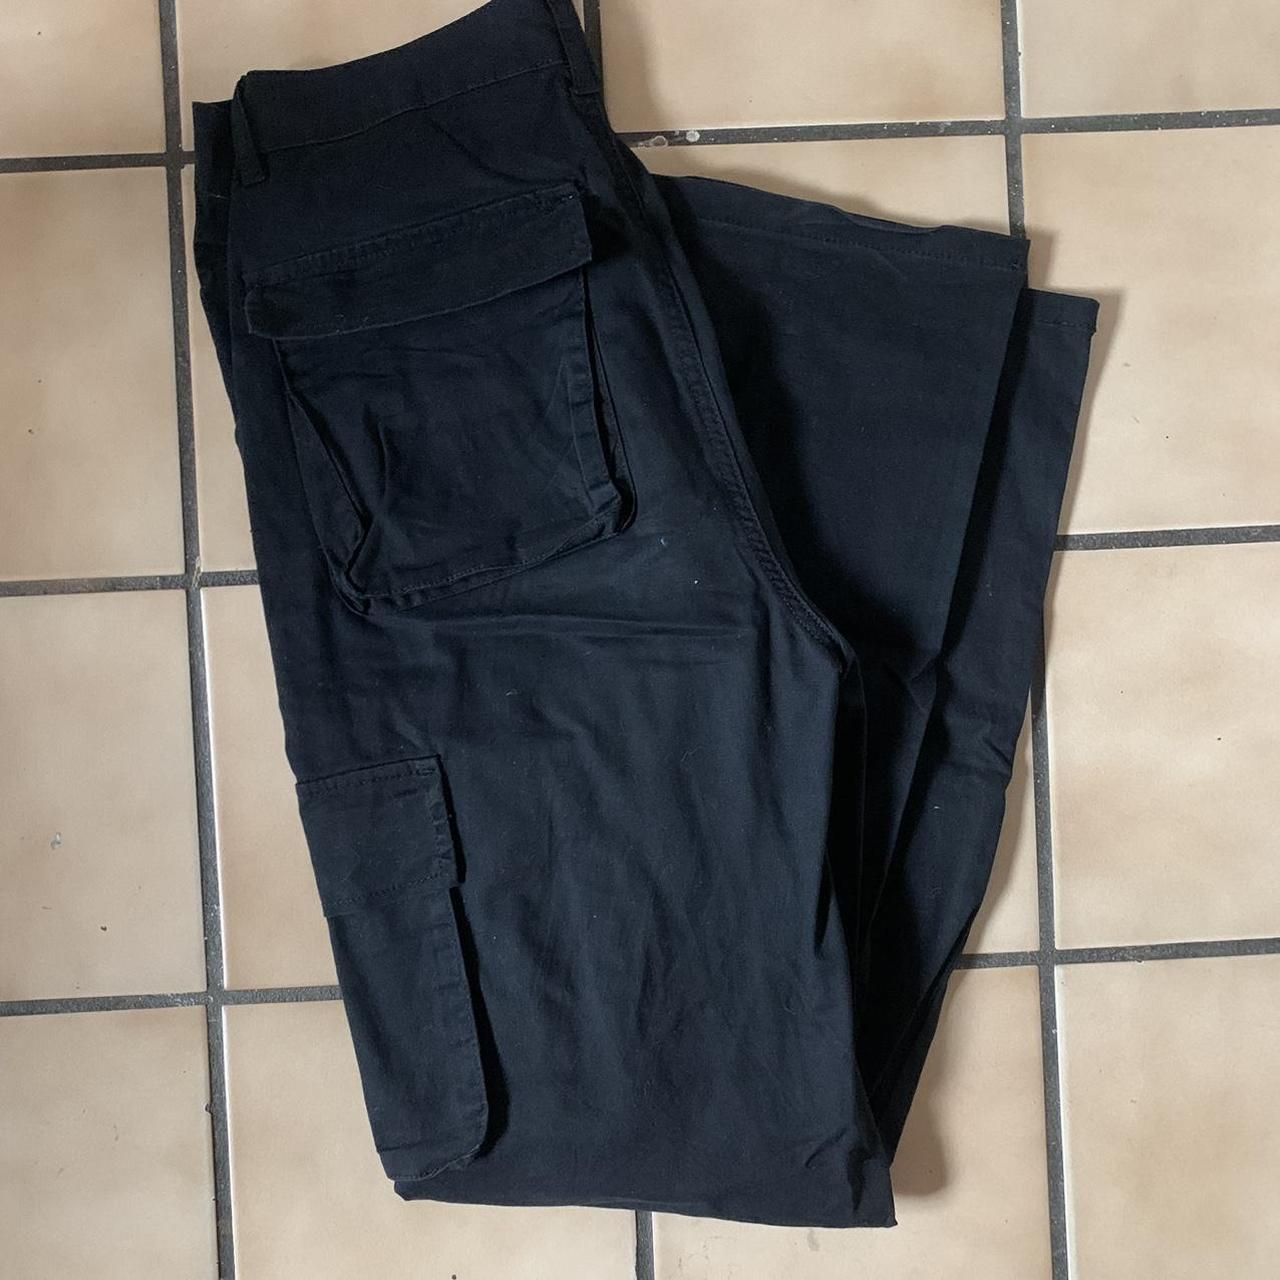 Black Cargo Pants Fits a small-medium worn a few... - Depop